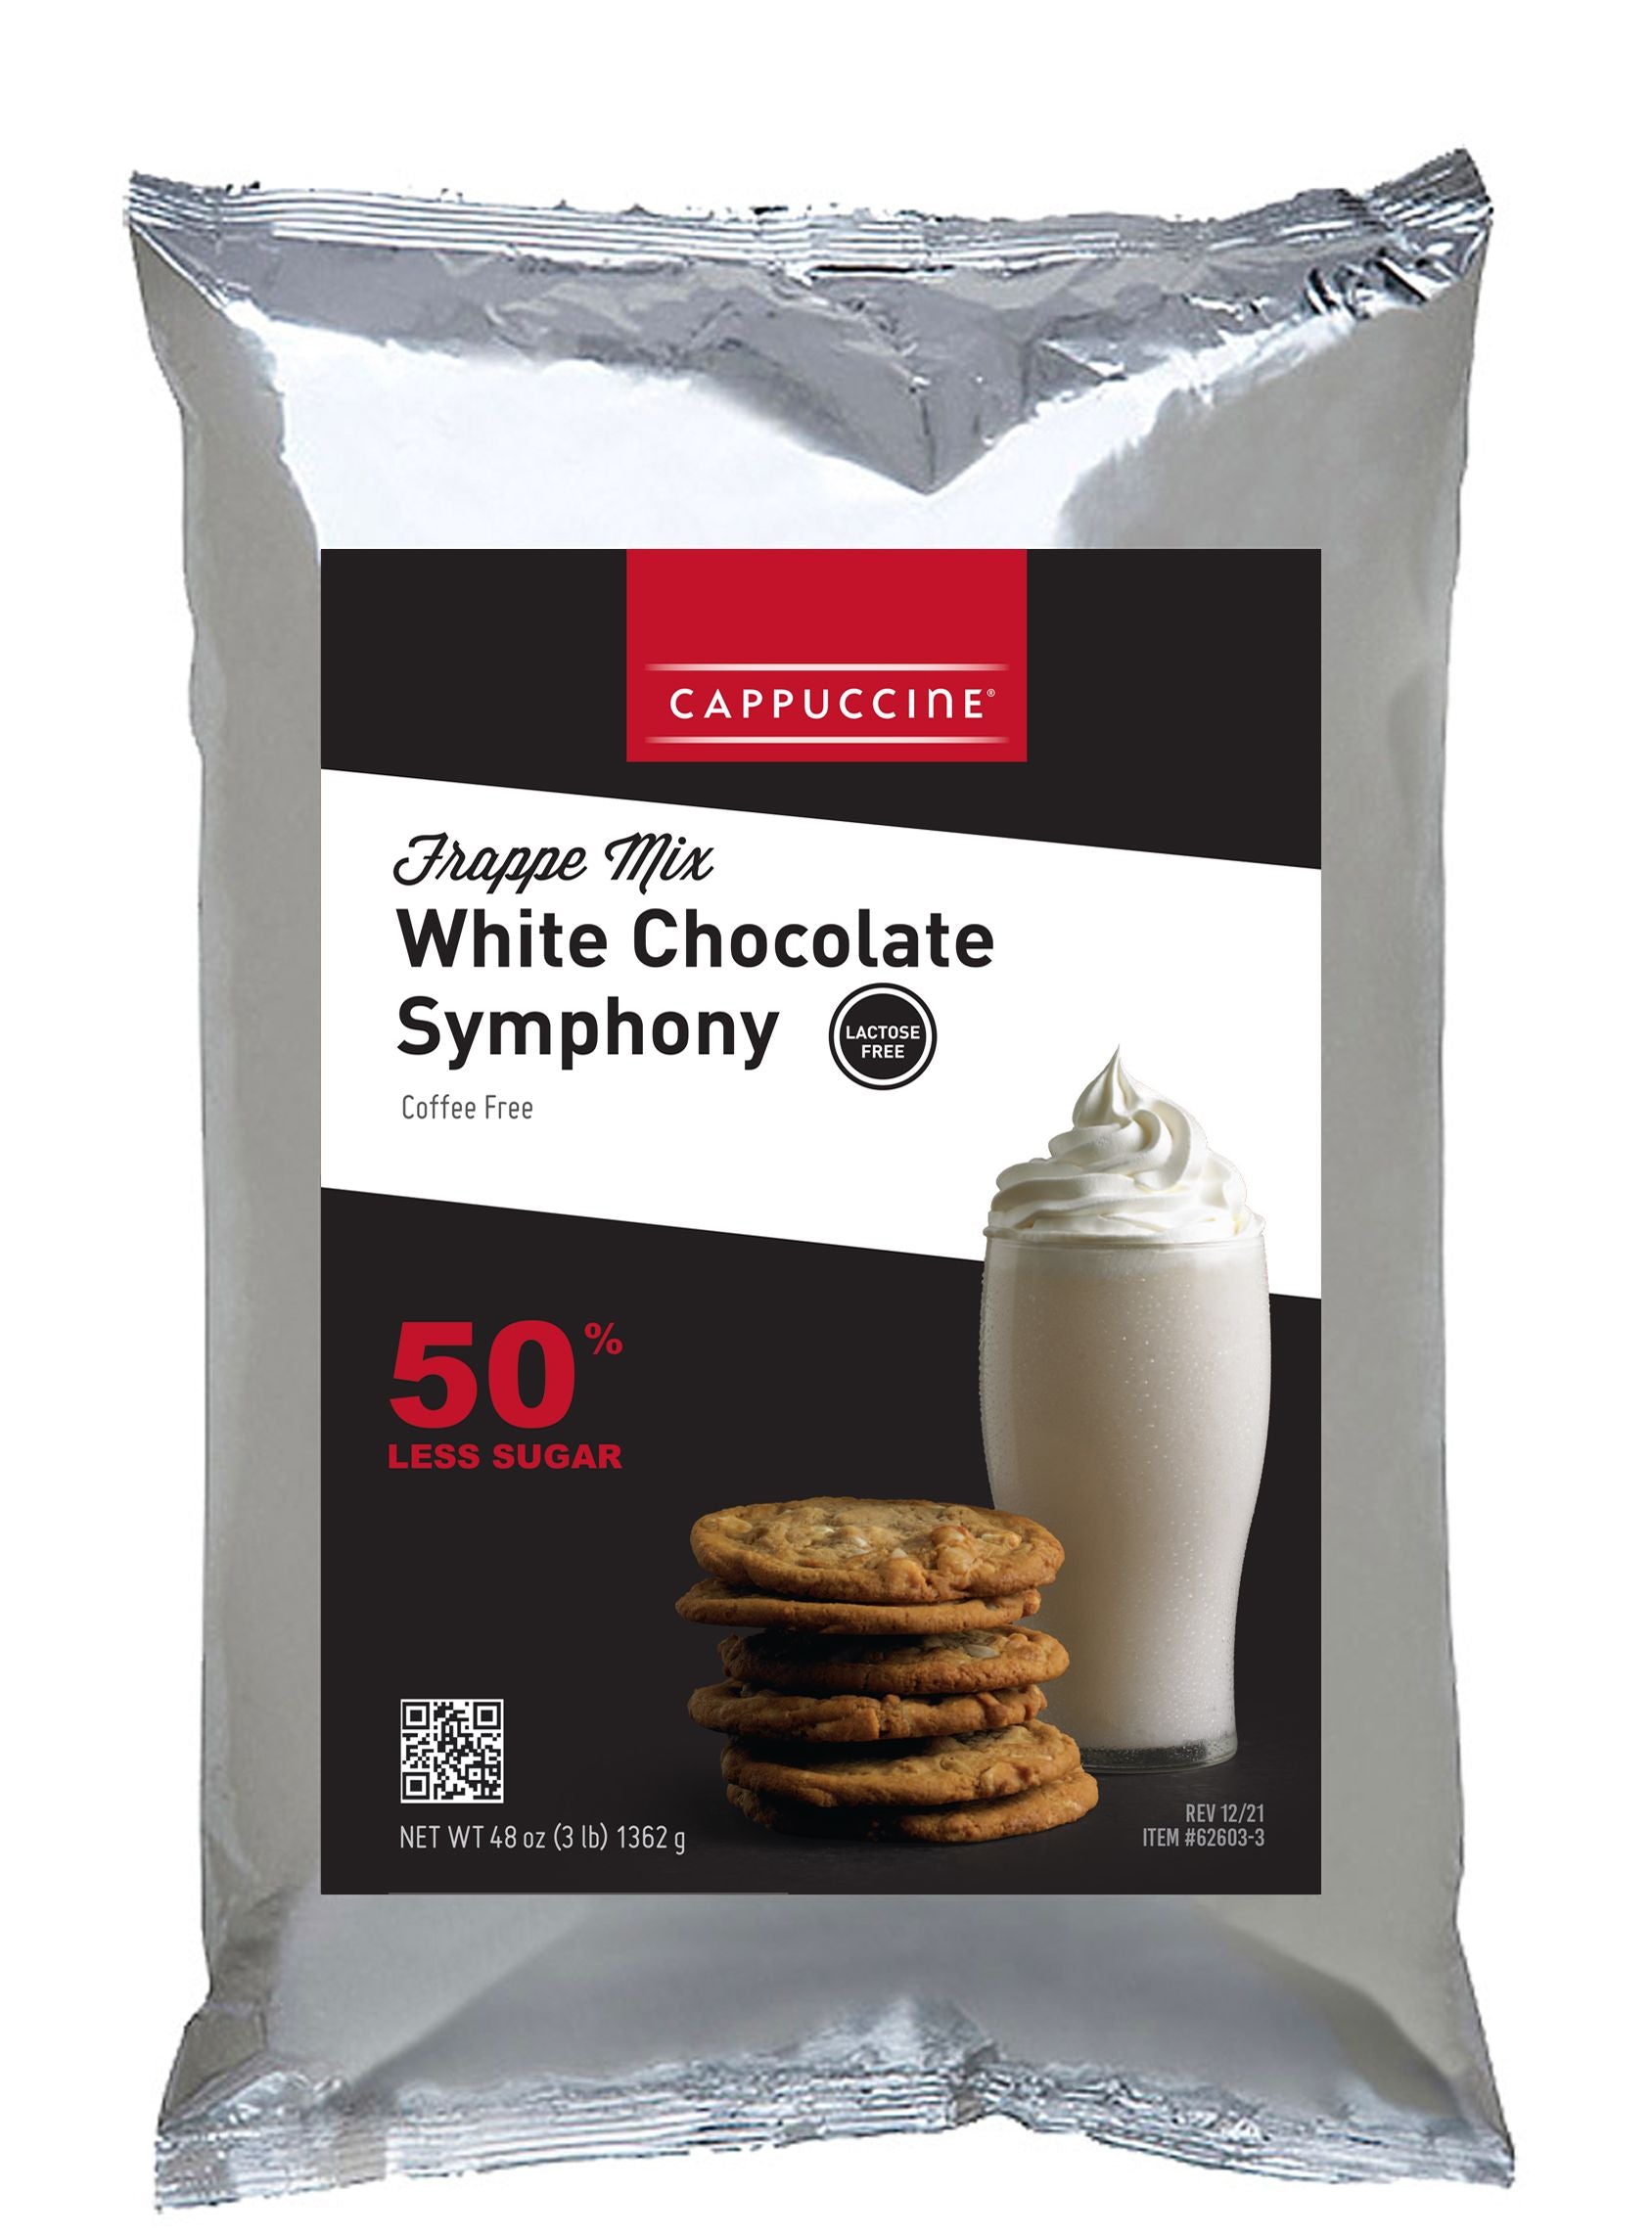 Cappuccine Frappe Mix - 3 lb. Bulk Bag: White Chocolate Symphony 50% Less Sugar